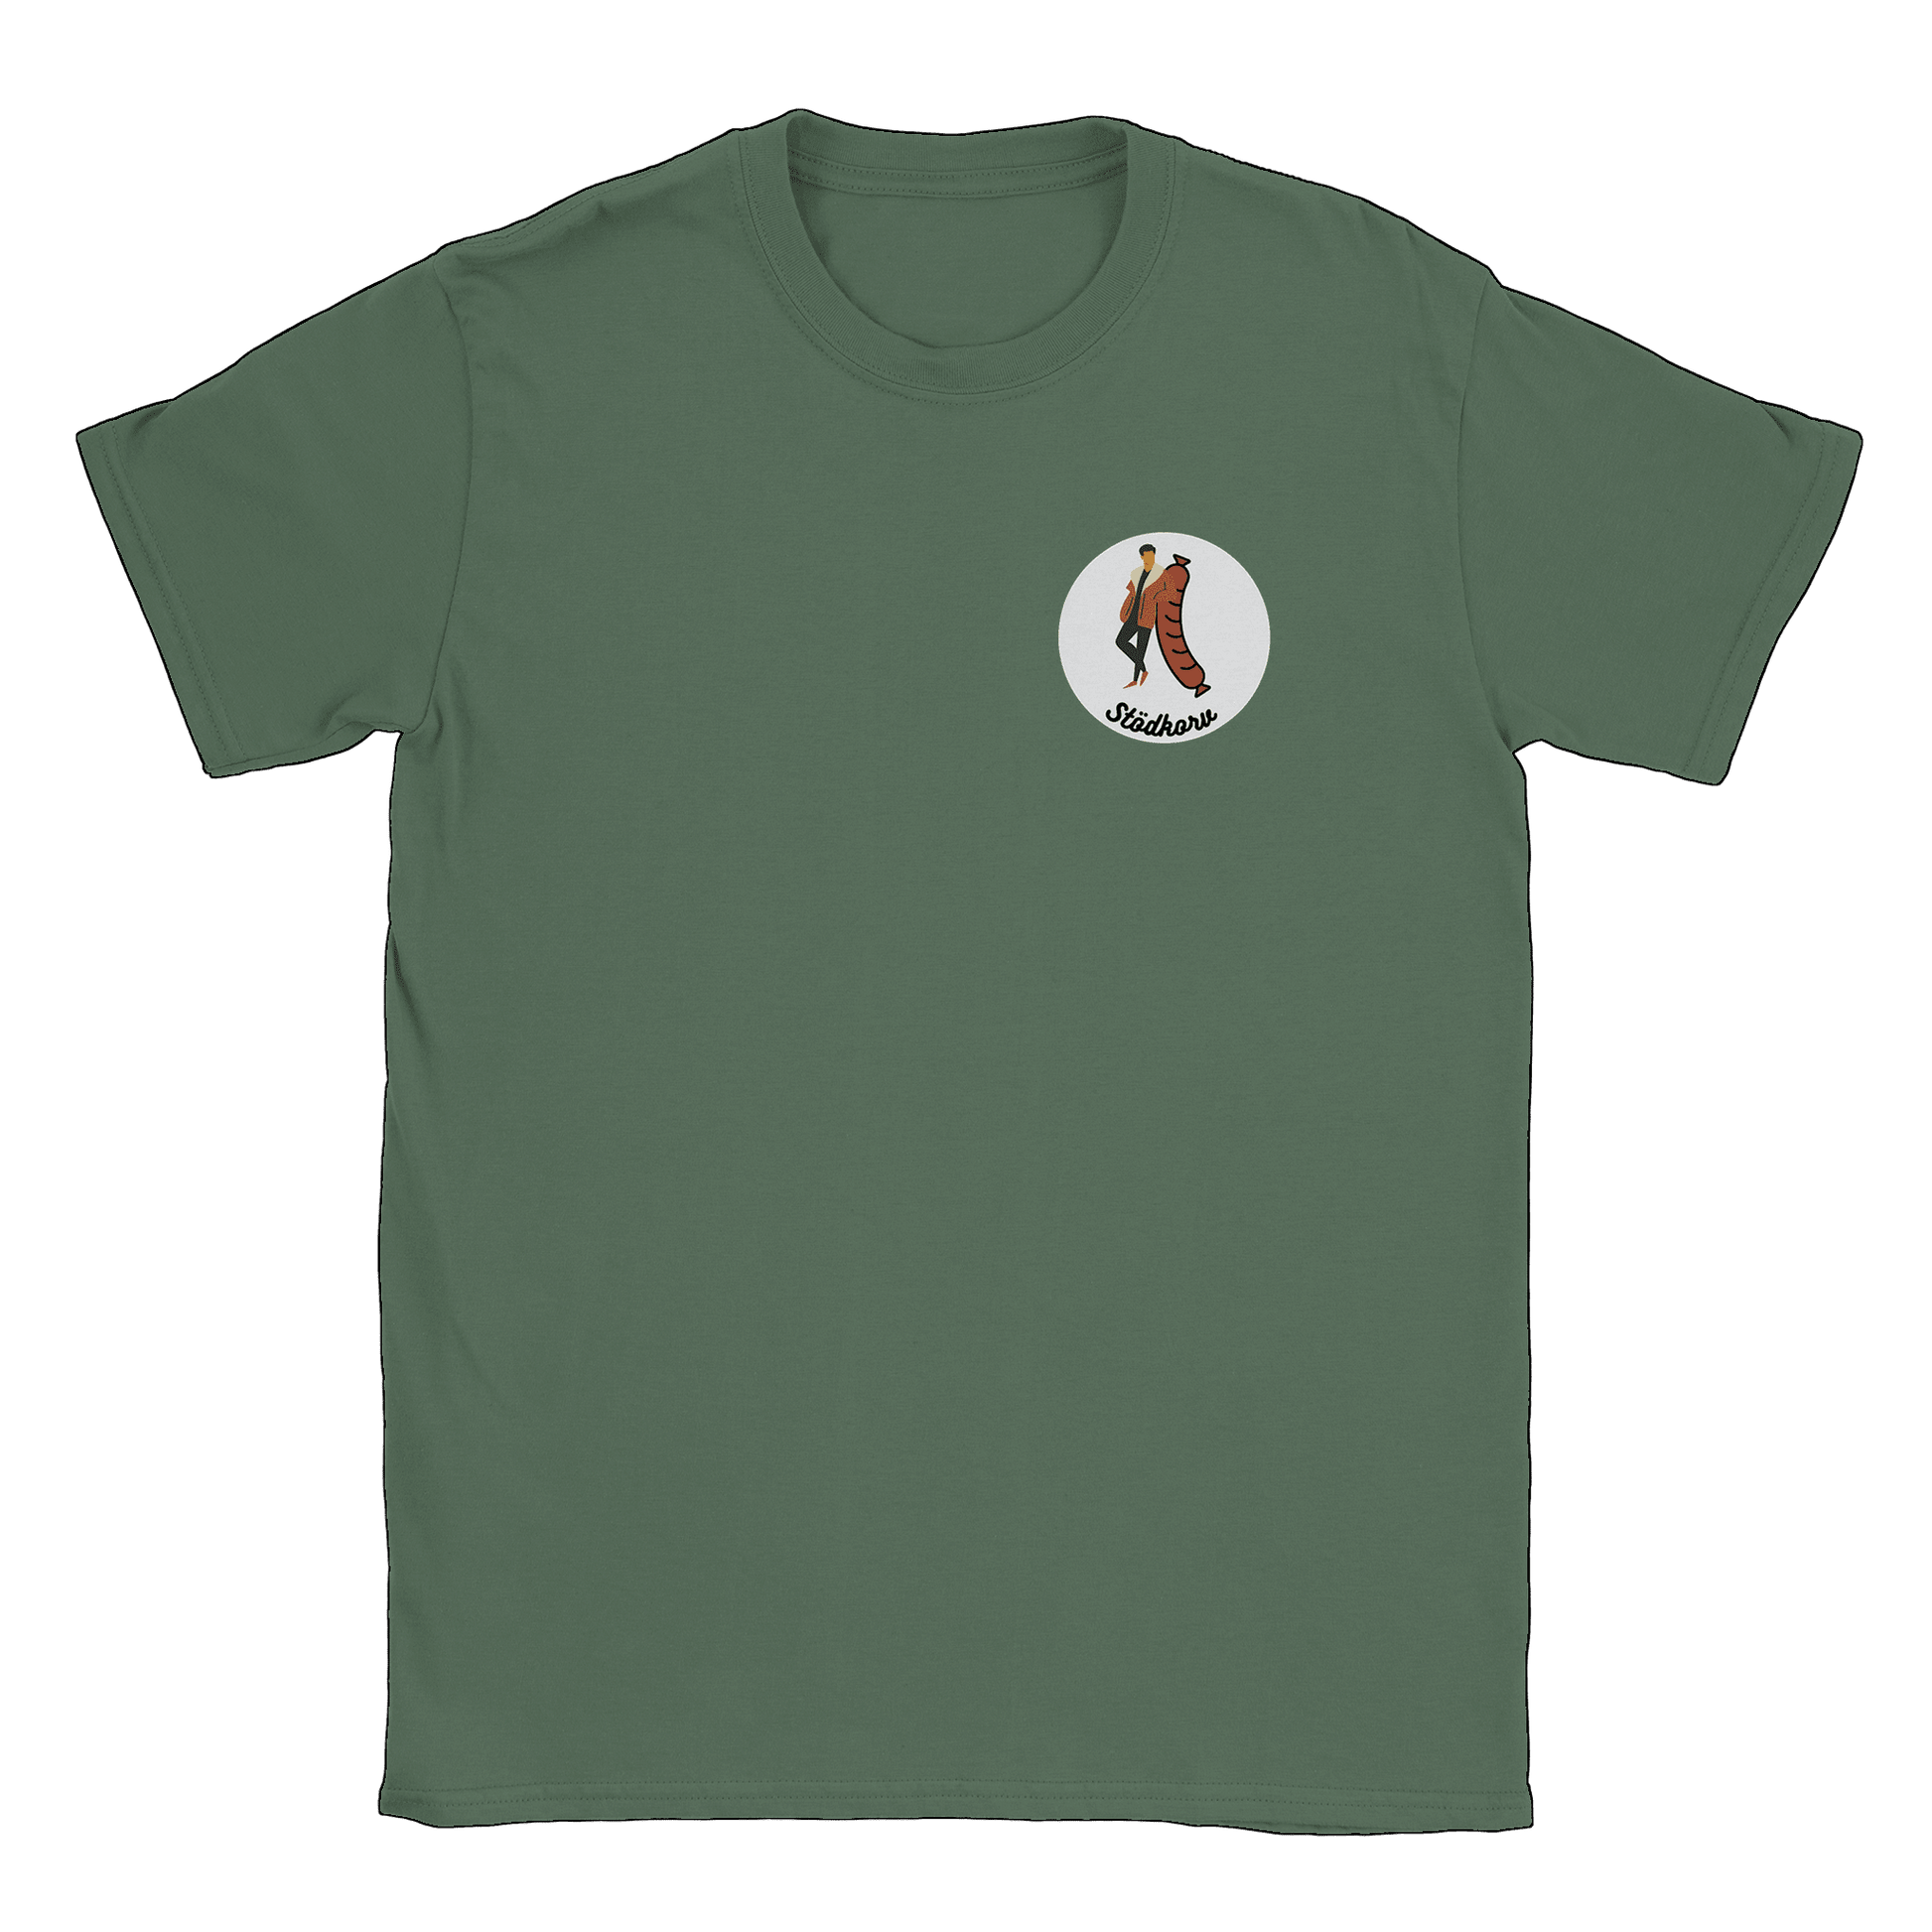 Stödkorven - T-shirt Military Green